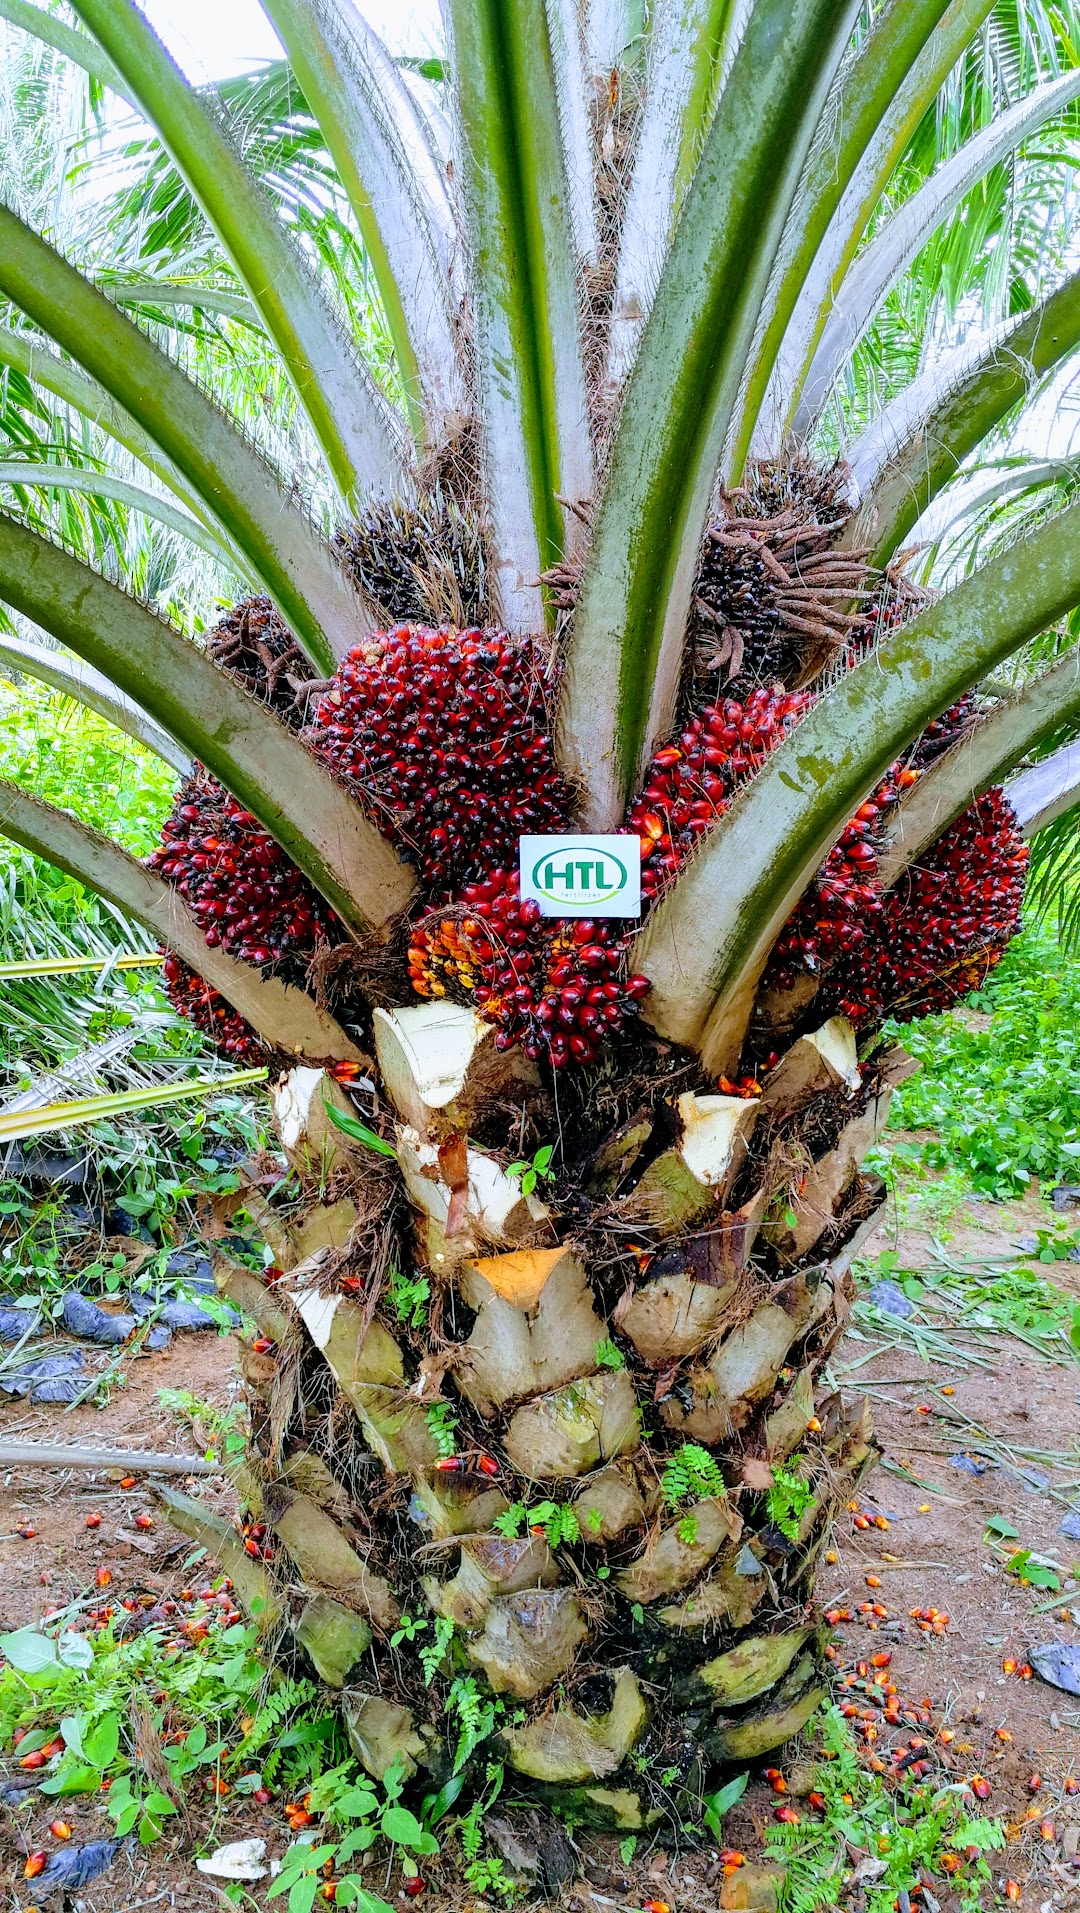 HTL Fertilizer (M) Sdn Bhd - Oil Palm Sample Lot